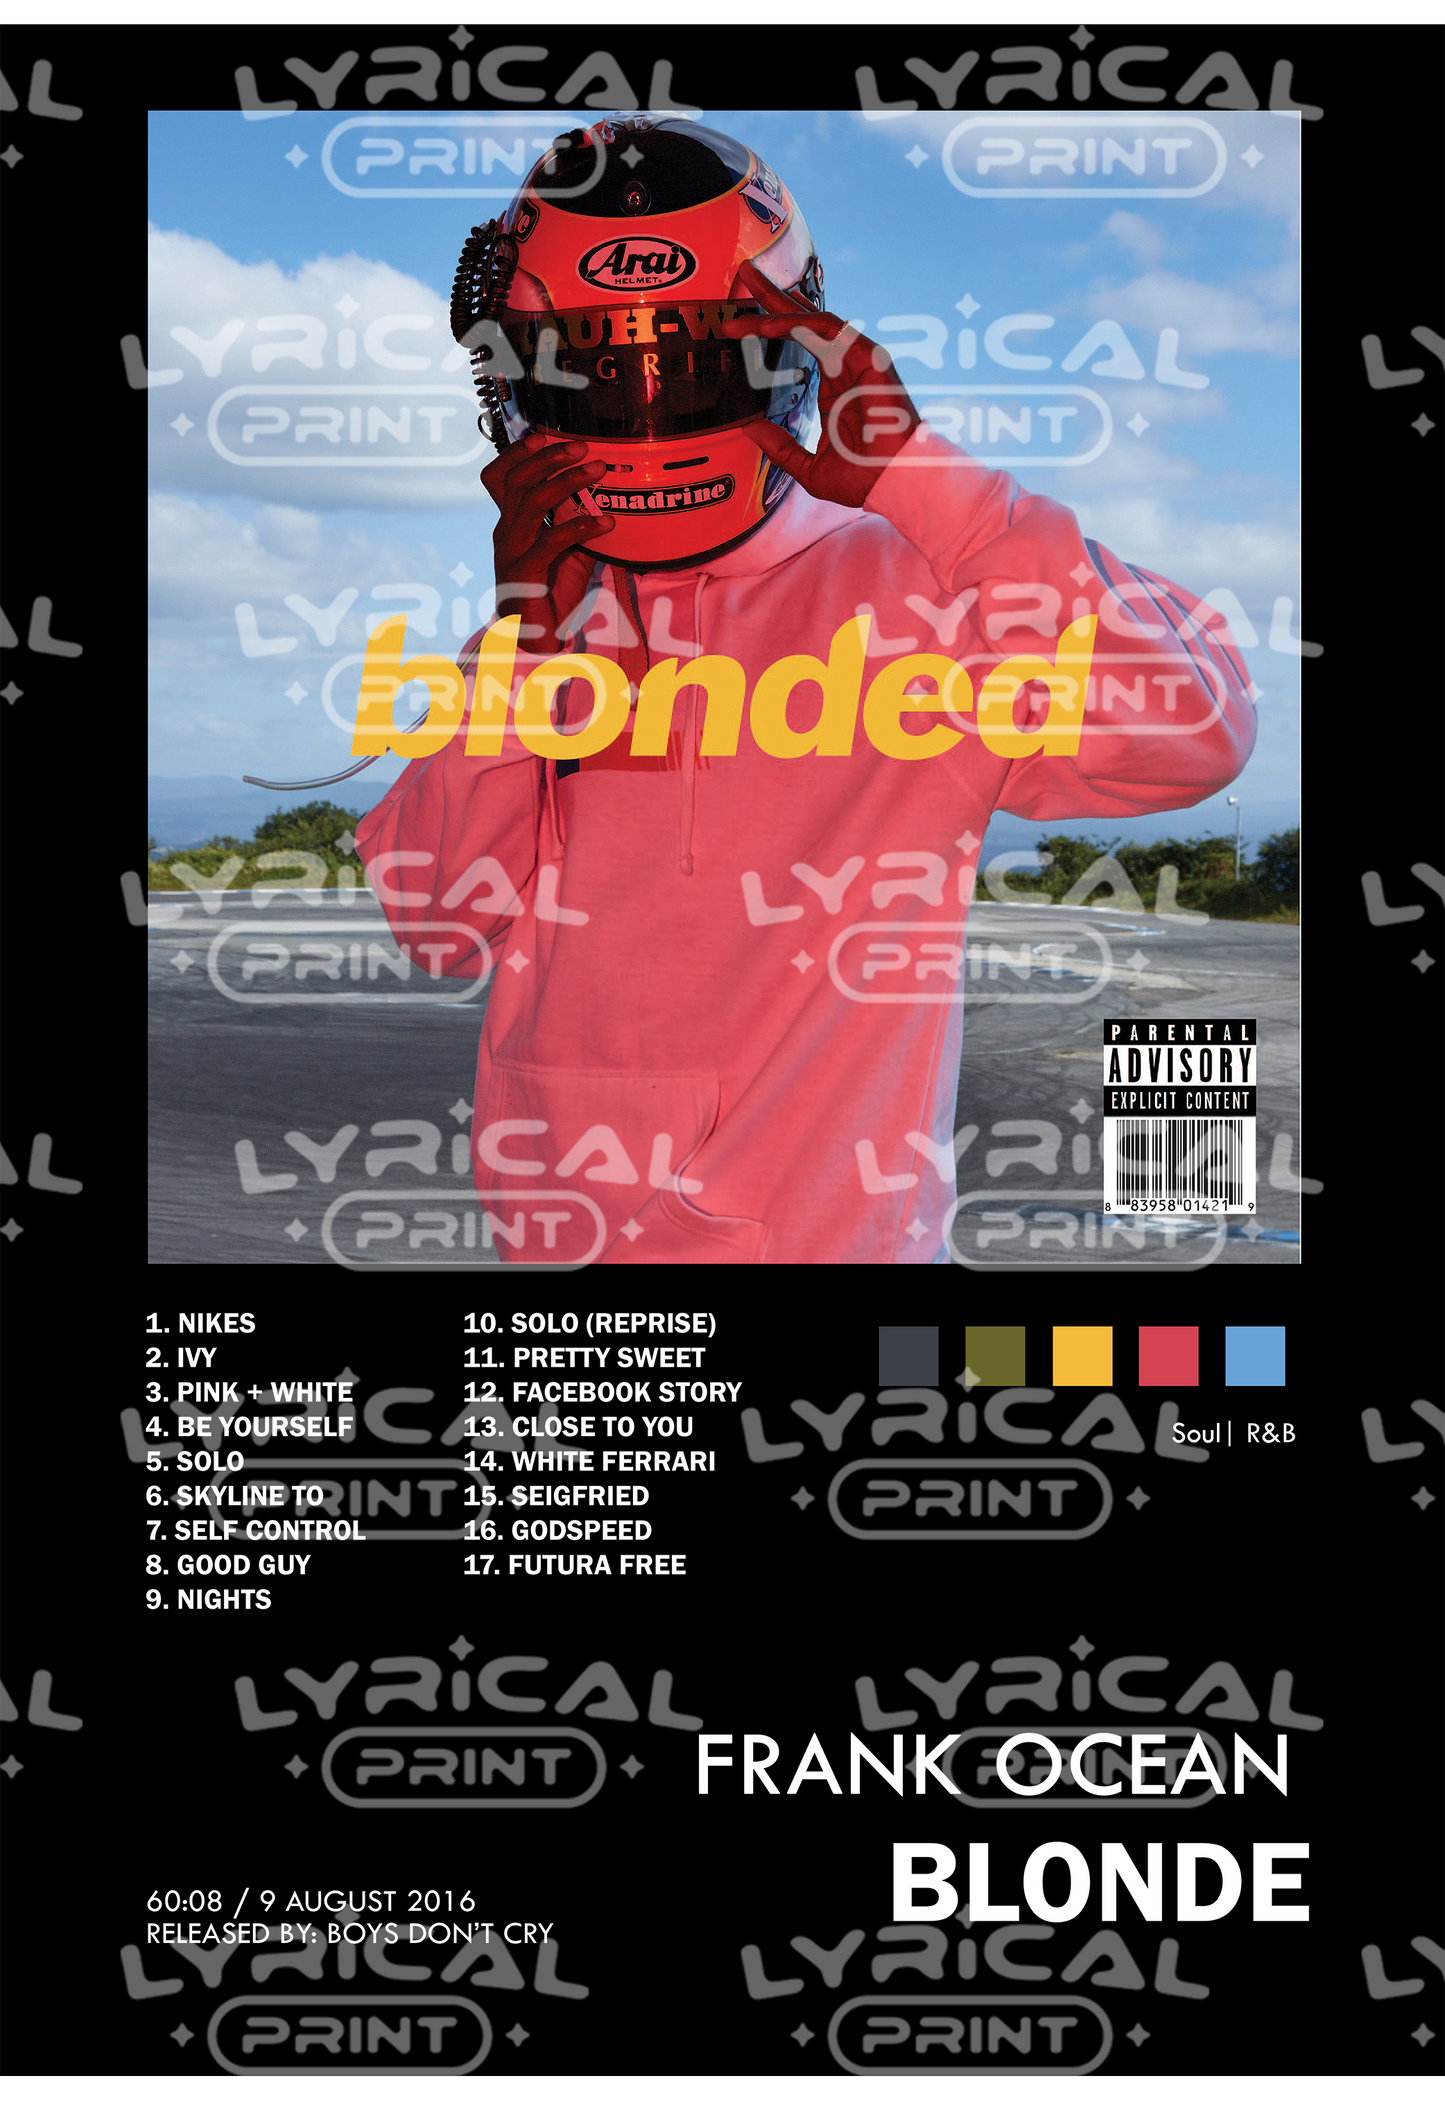 Frank Ocean - Blonde Alt